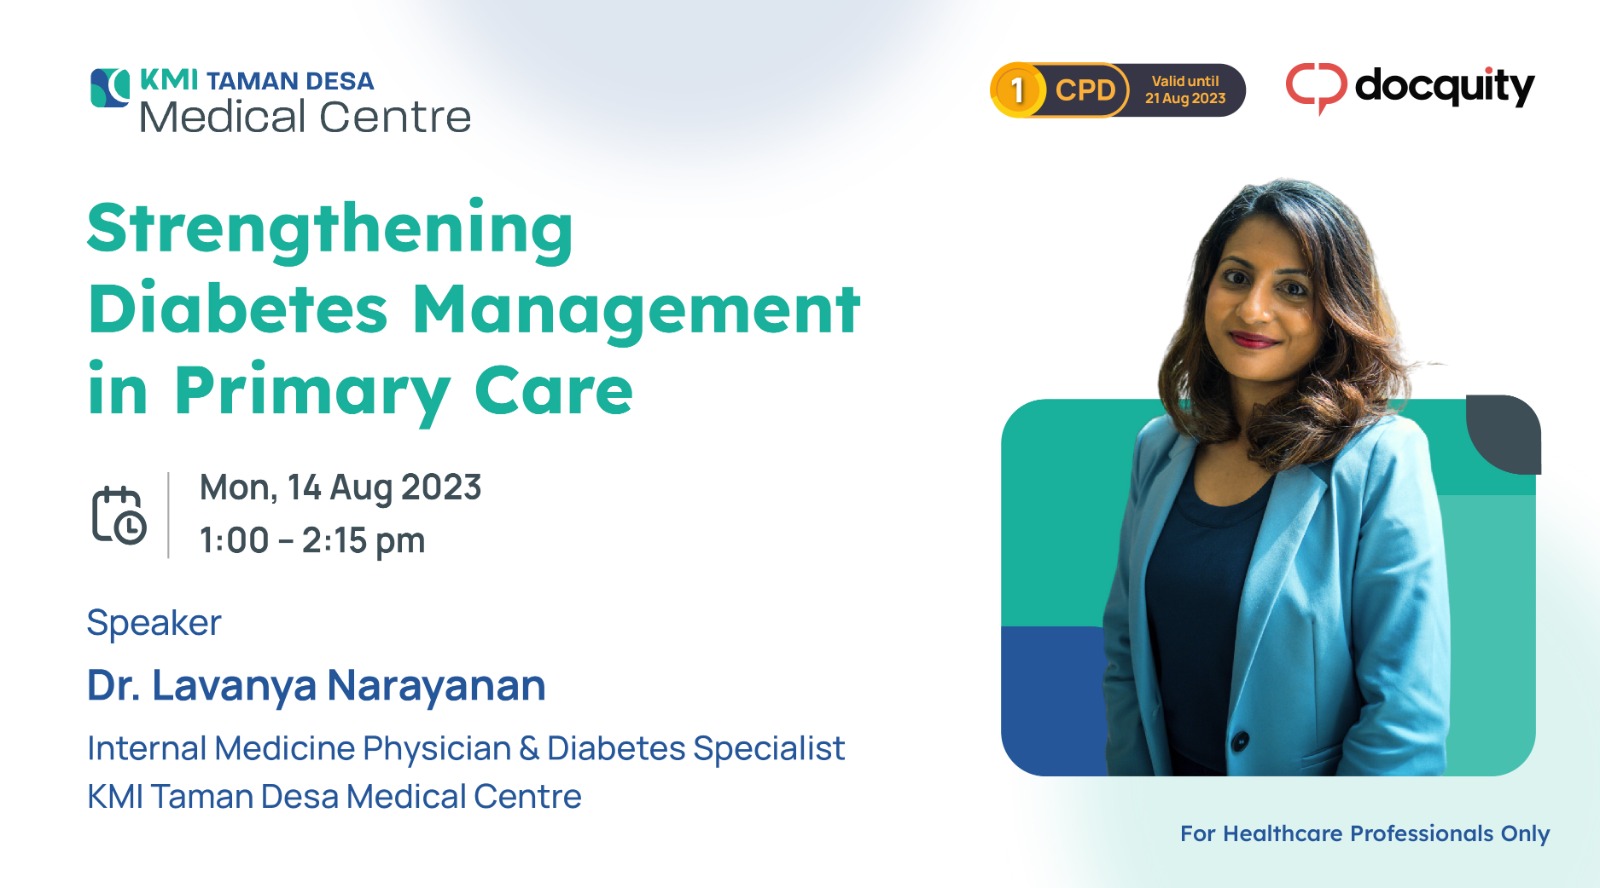 Strengthening Diabetes Management in Primary Care- Dr. Lavanya Narayanan